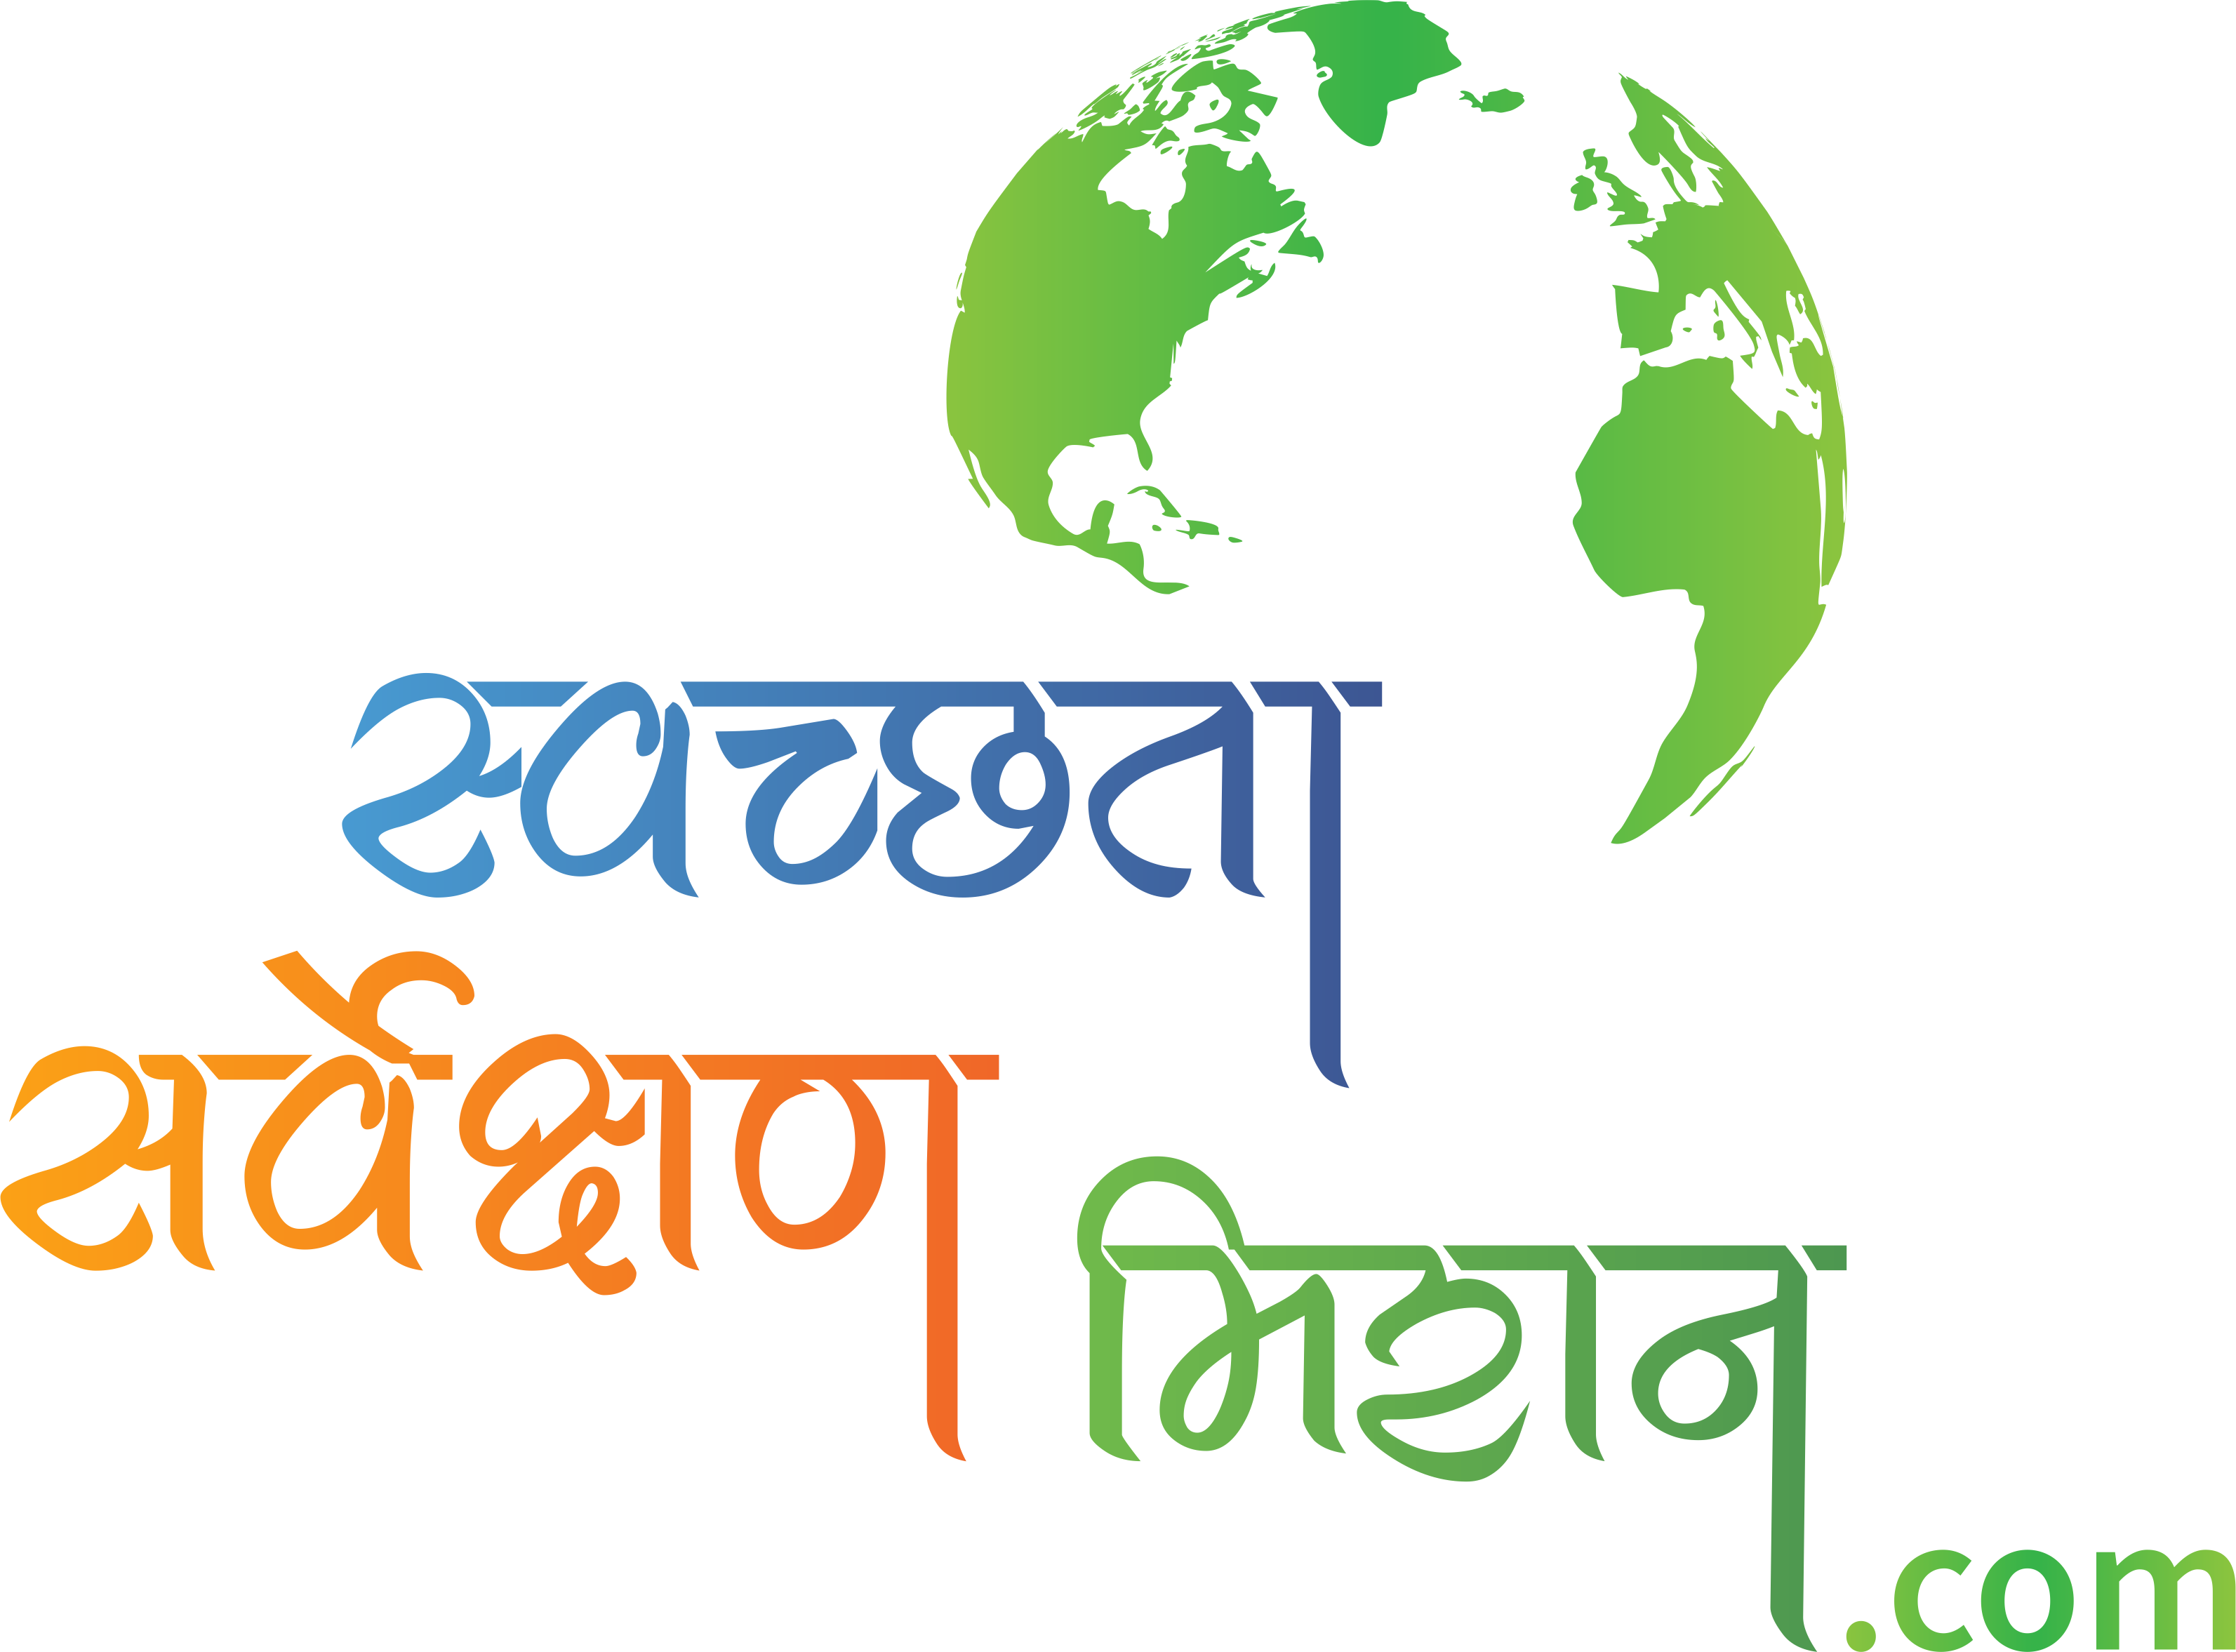 Swachhata Survekshan Mission: Leading Towards a Plastic-Free India